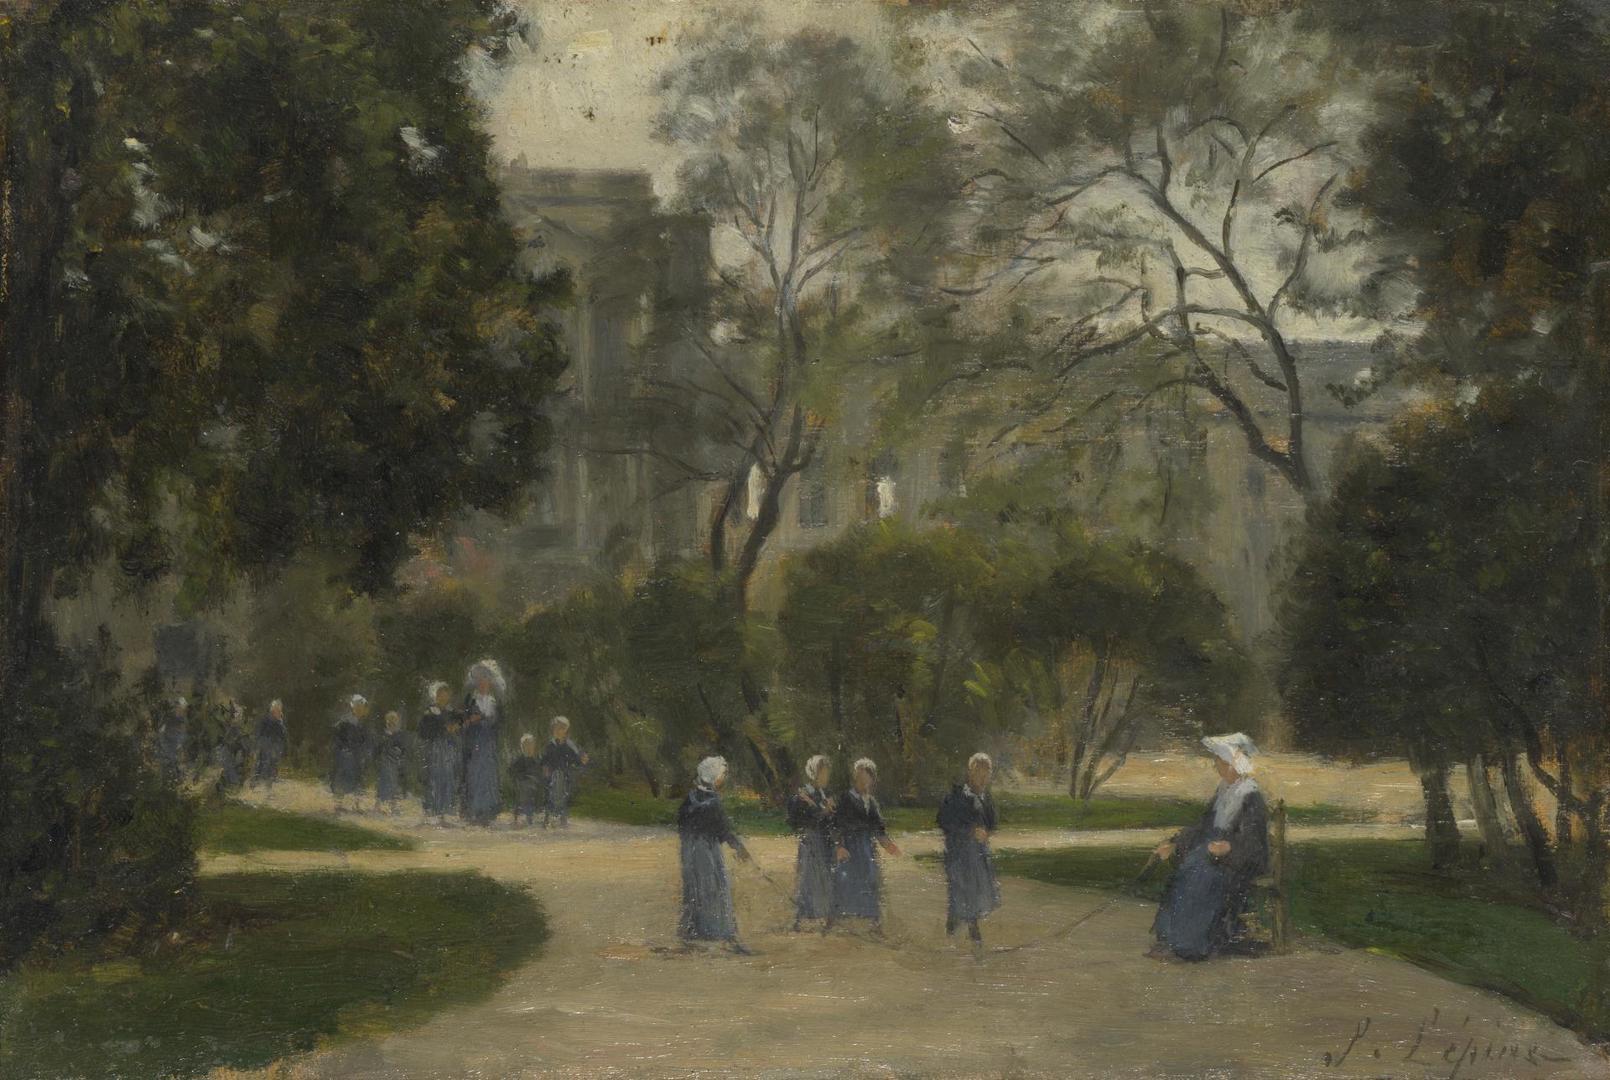 Nuns and Schoolgirls in the Tuileries Gardens, Paris by Stanislas-Victor-Edmond Lépine